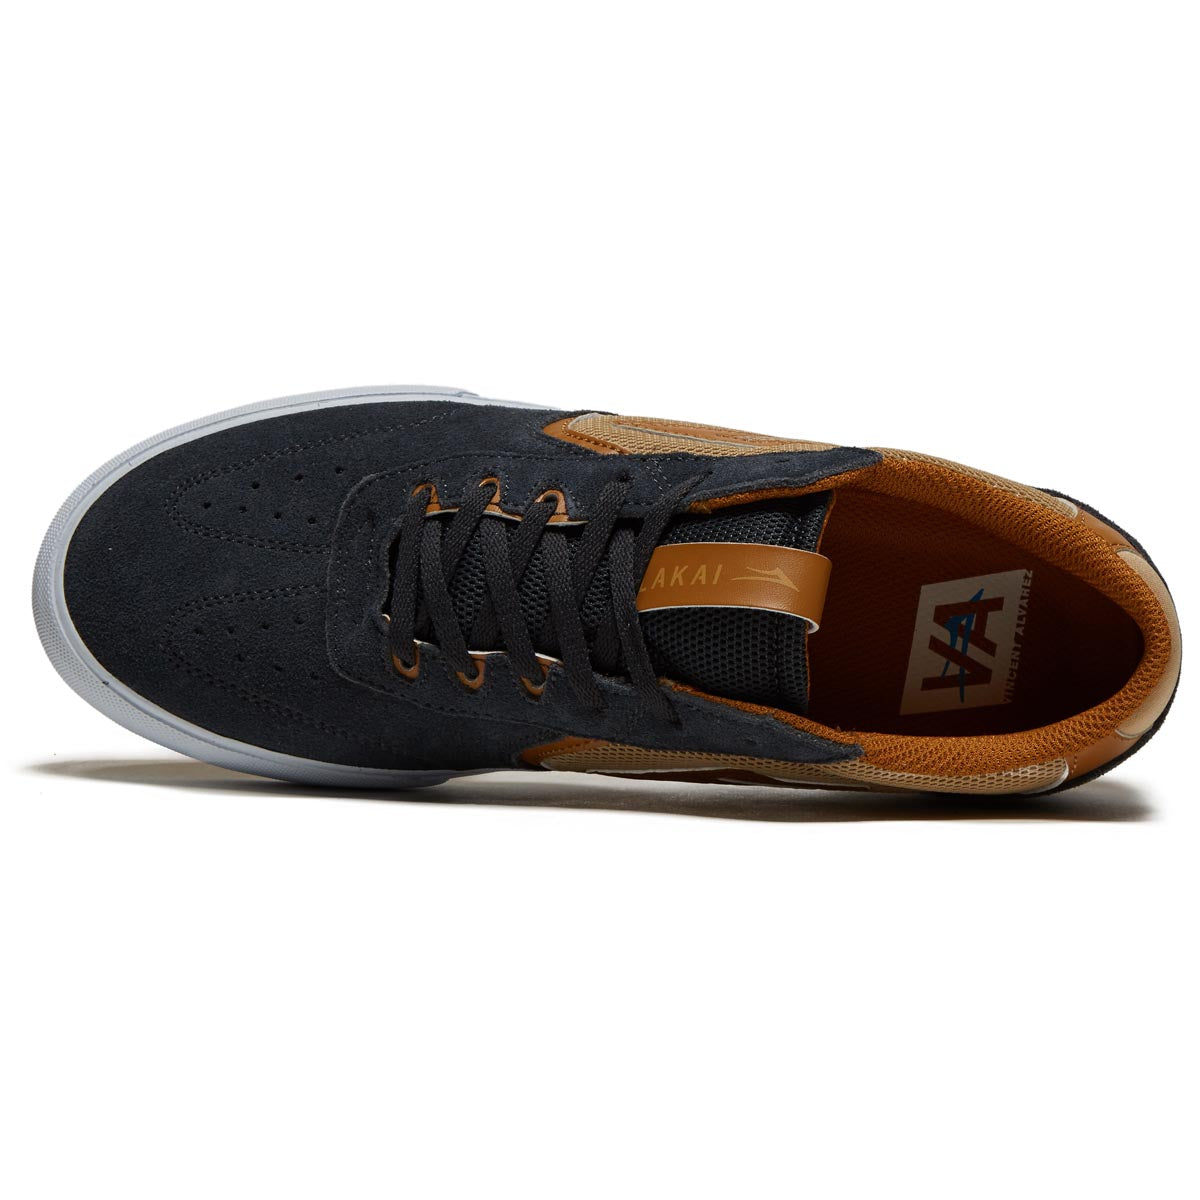 Lakai Atlantic Vulc Shoes - Charcoal/Tan Suede image 3